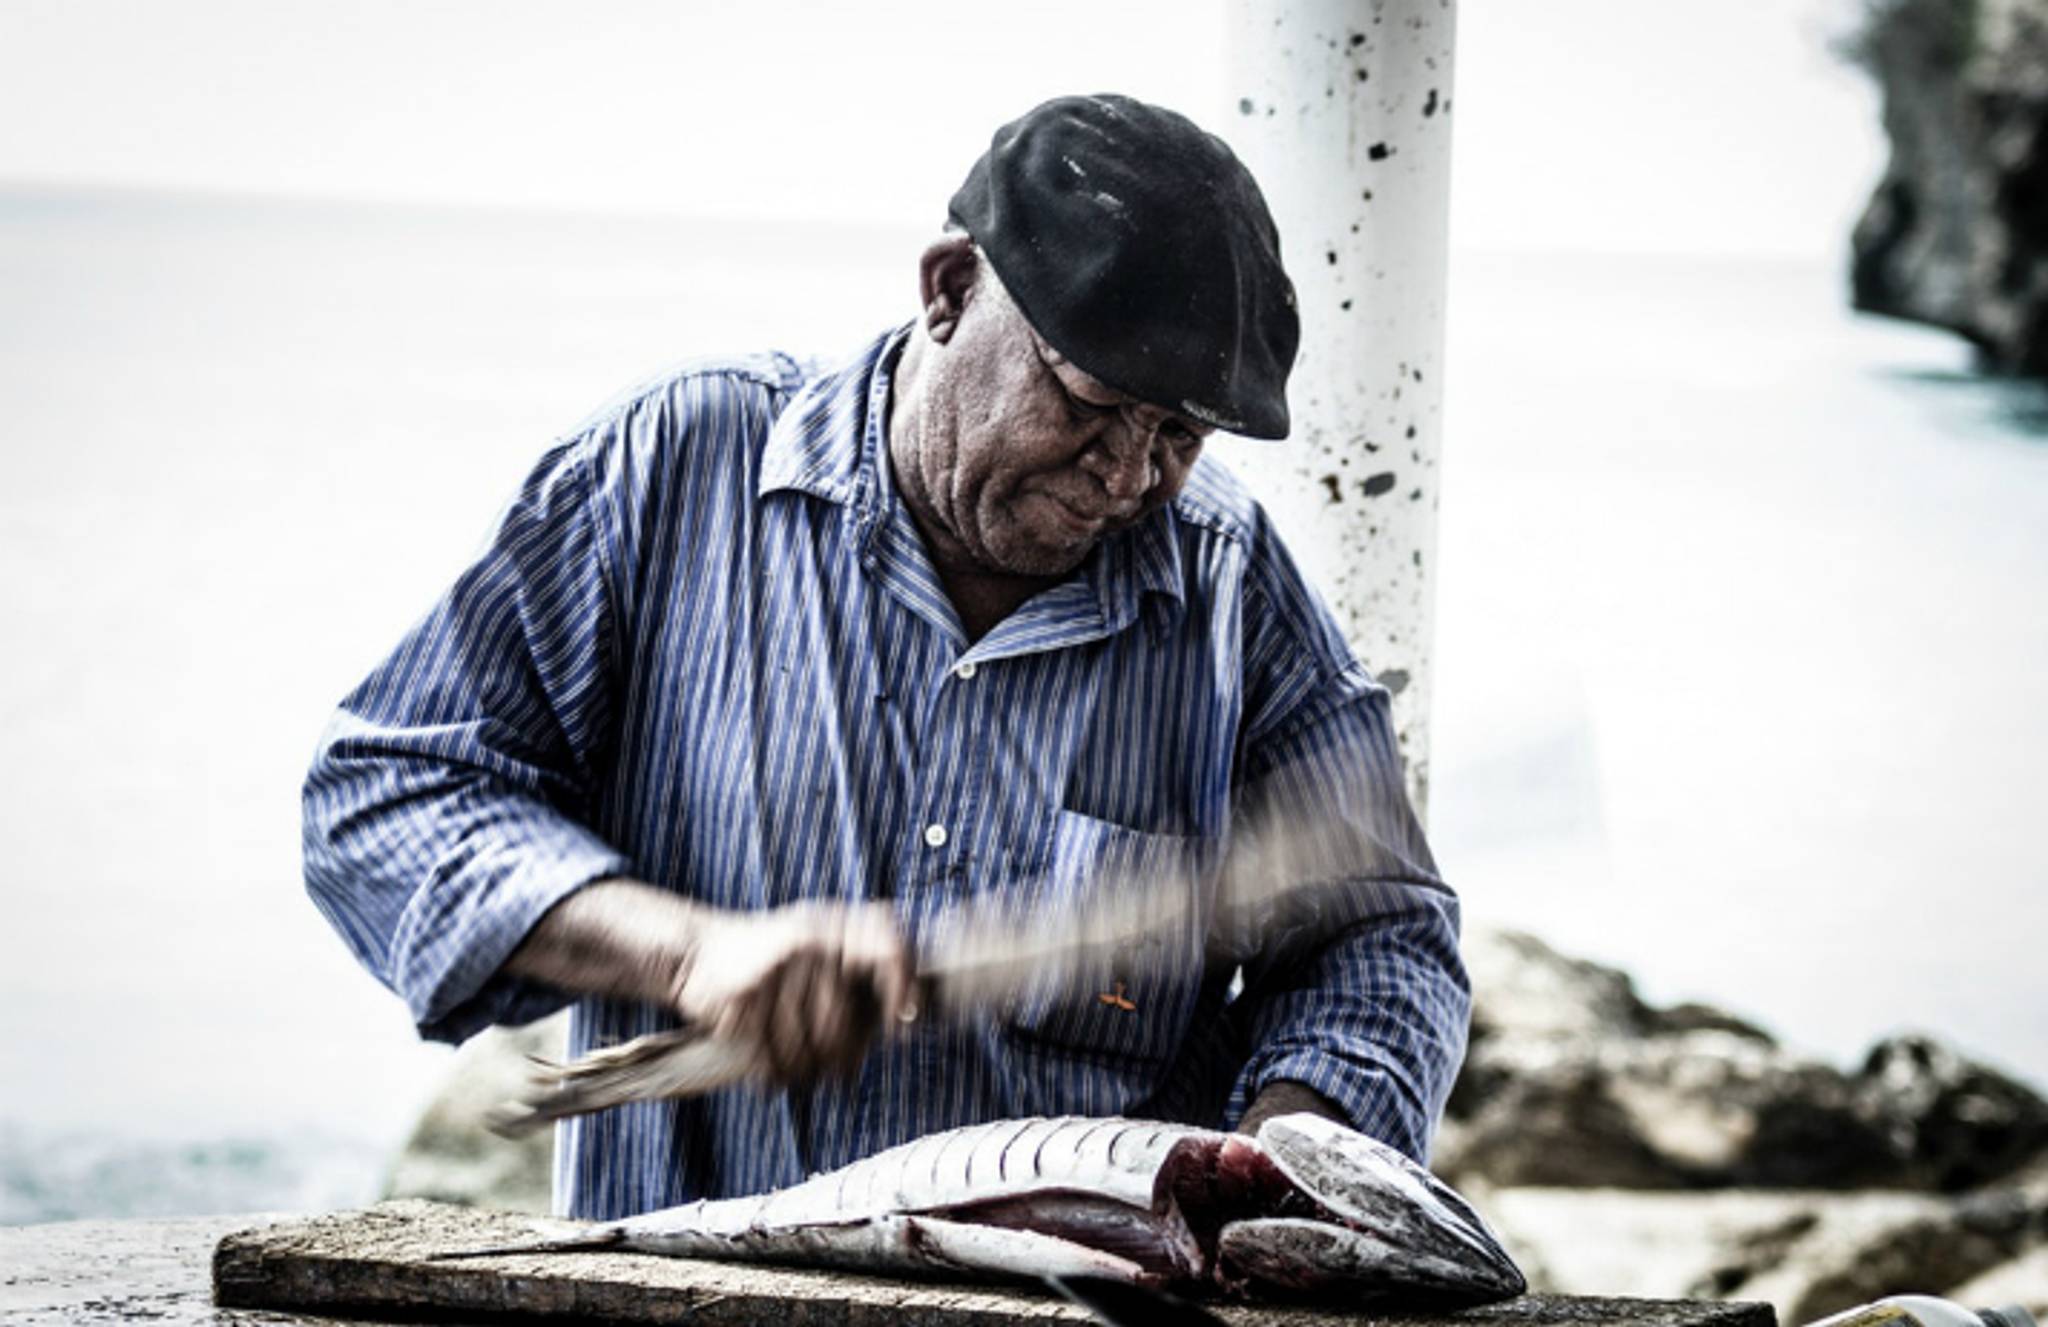 Fish Butchery helps Aussies reduce food waste